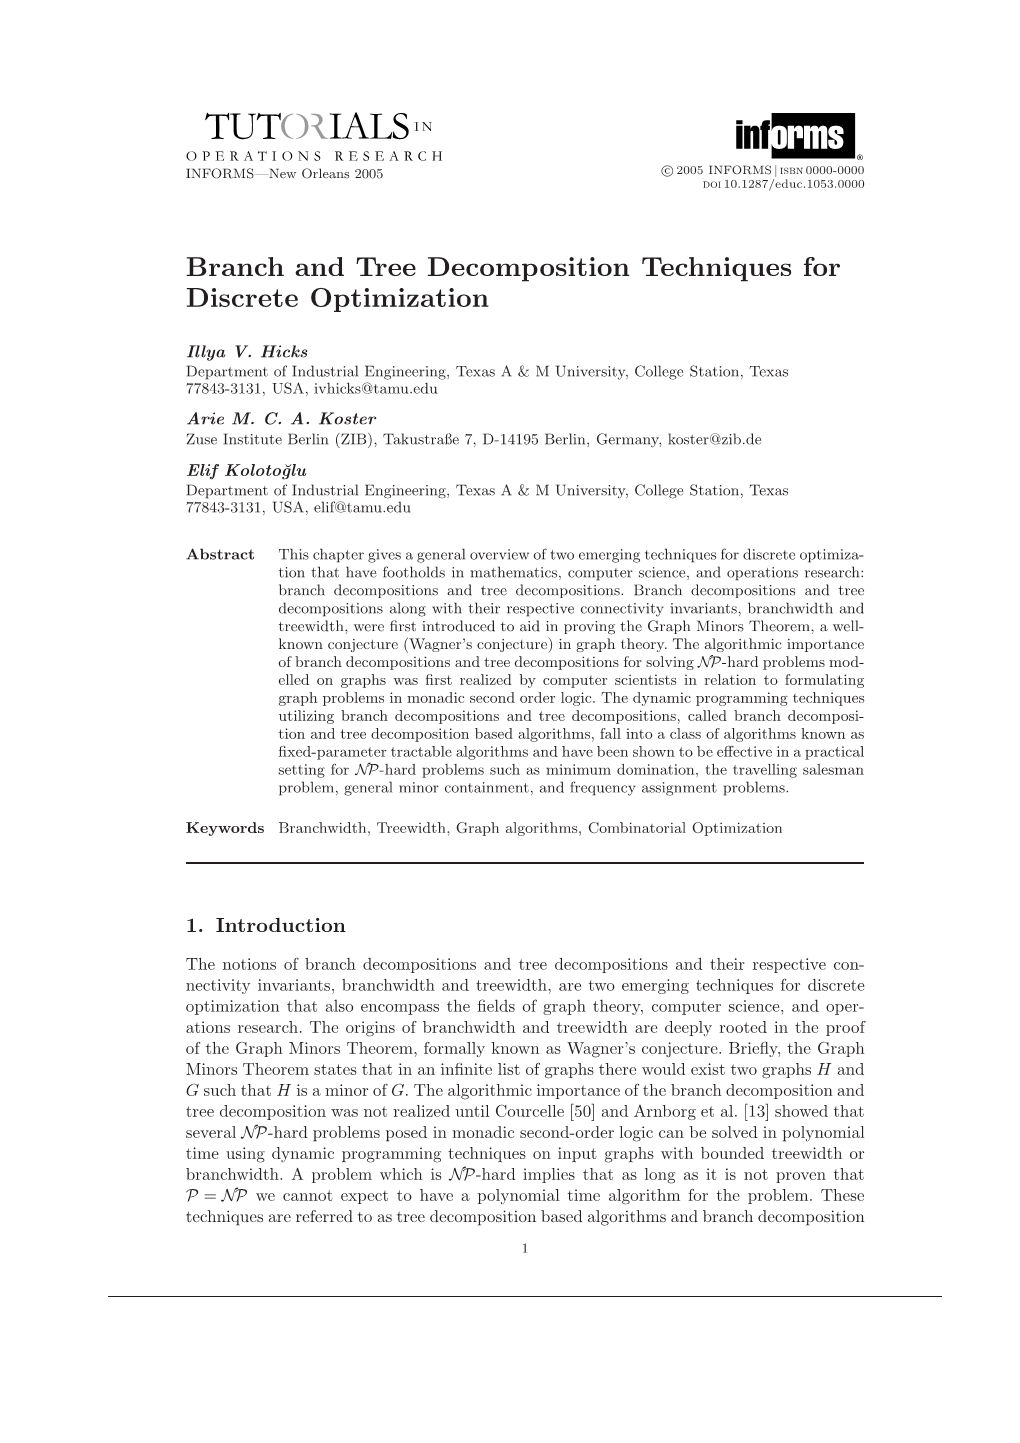 Branch and Tree Decomposition Techniques for Discrete Optimization